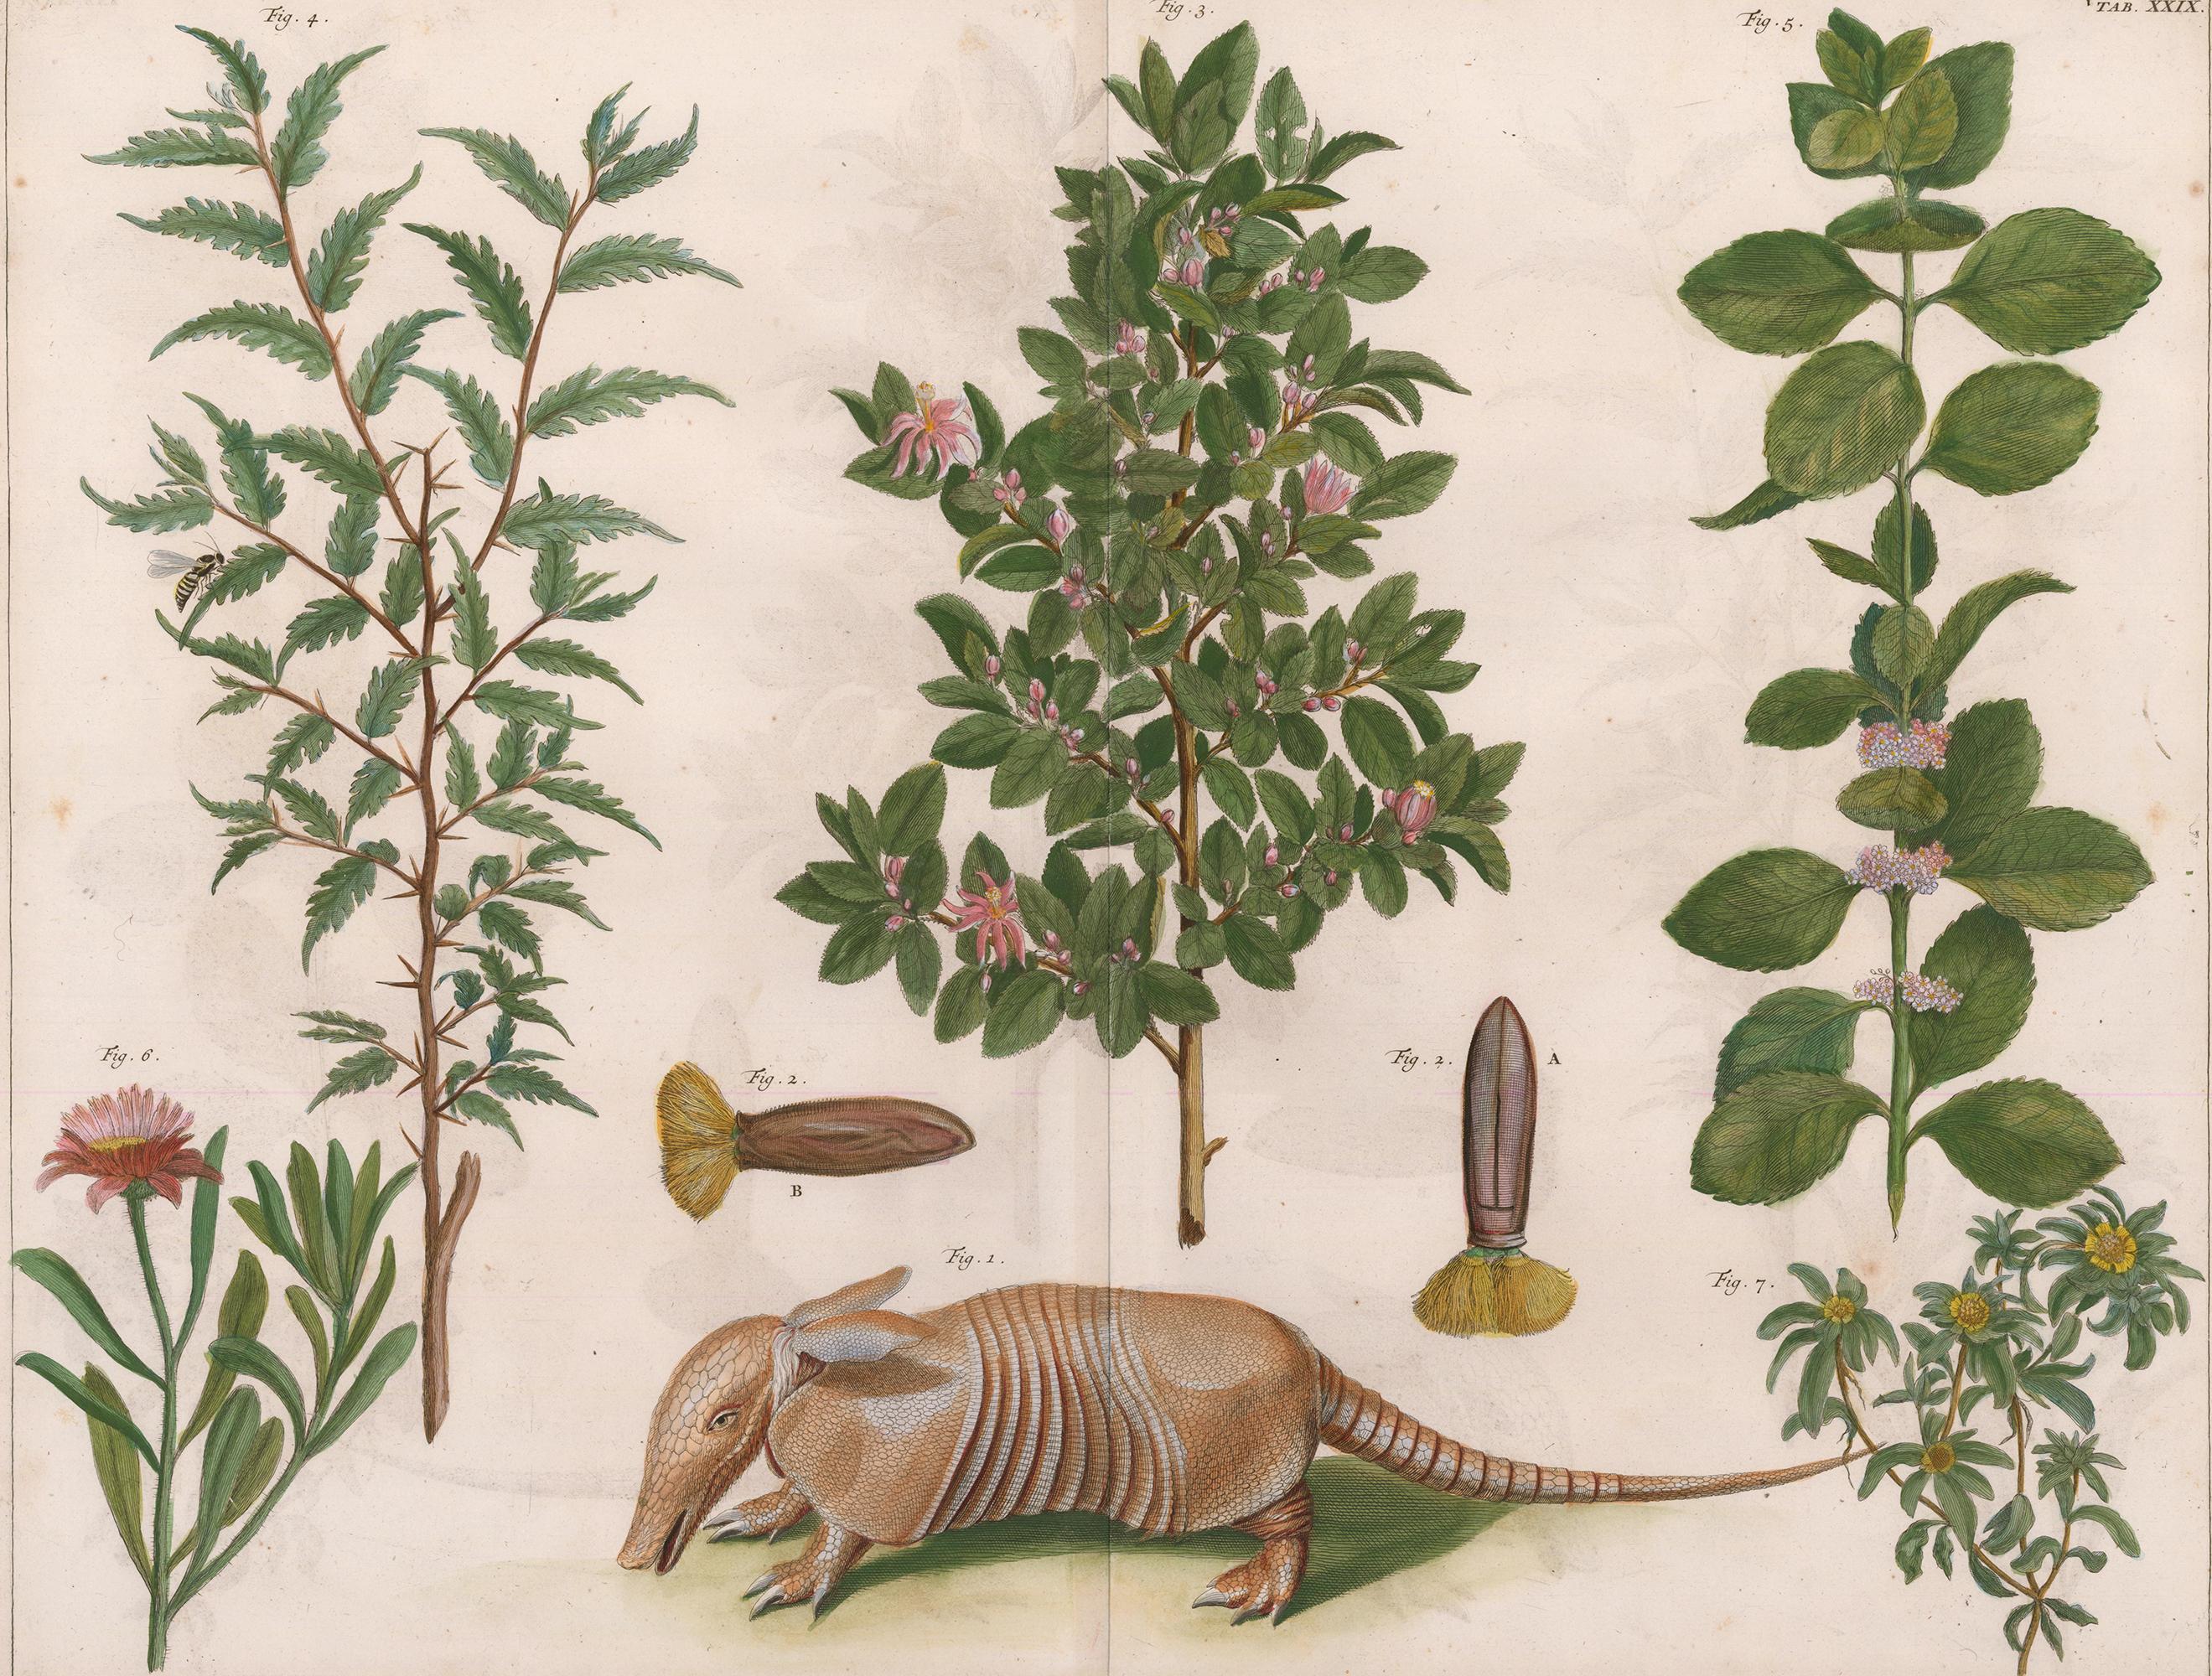 Armadillo and Flowering Plant Engraving - Print by Albertus Seba